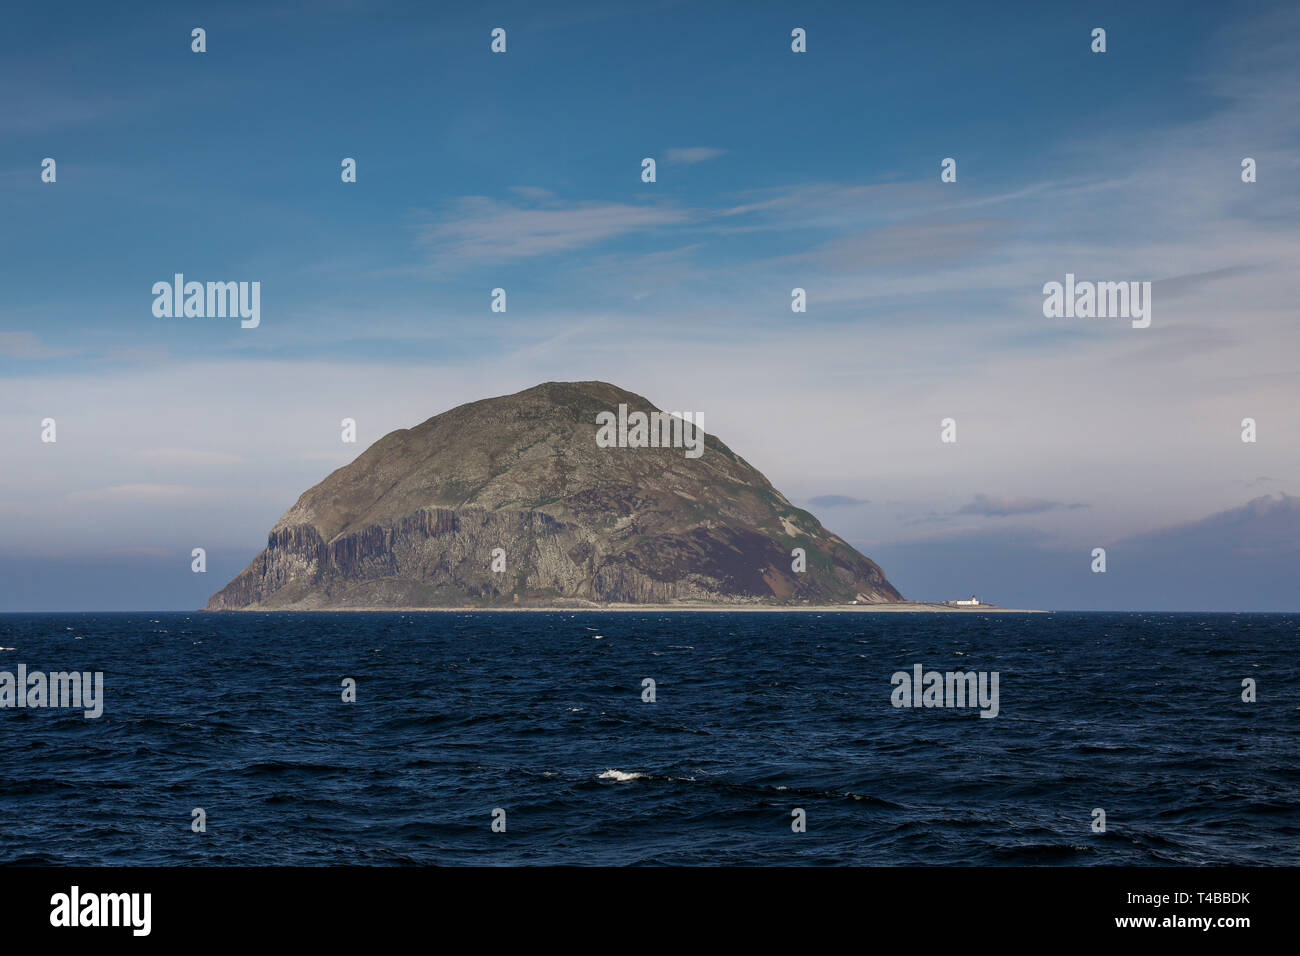 The island of Ailsa Craig off the west coast of Scotland Stock Photo